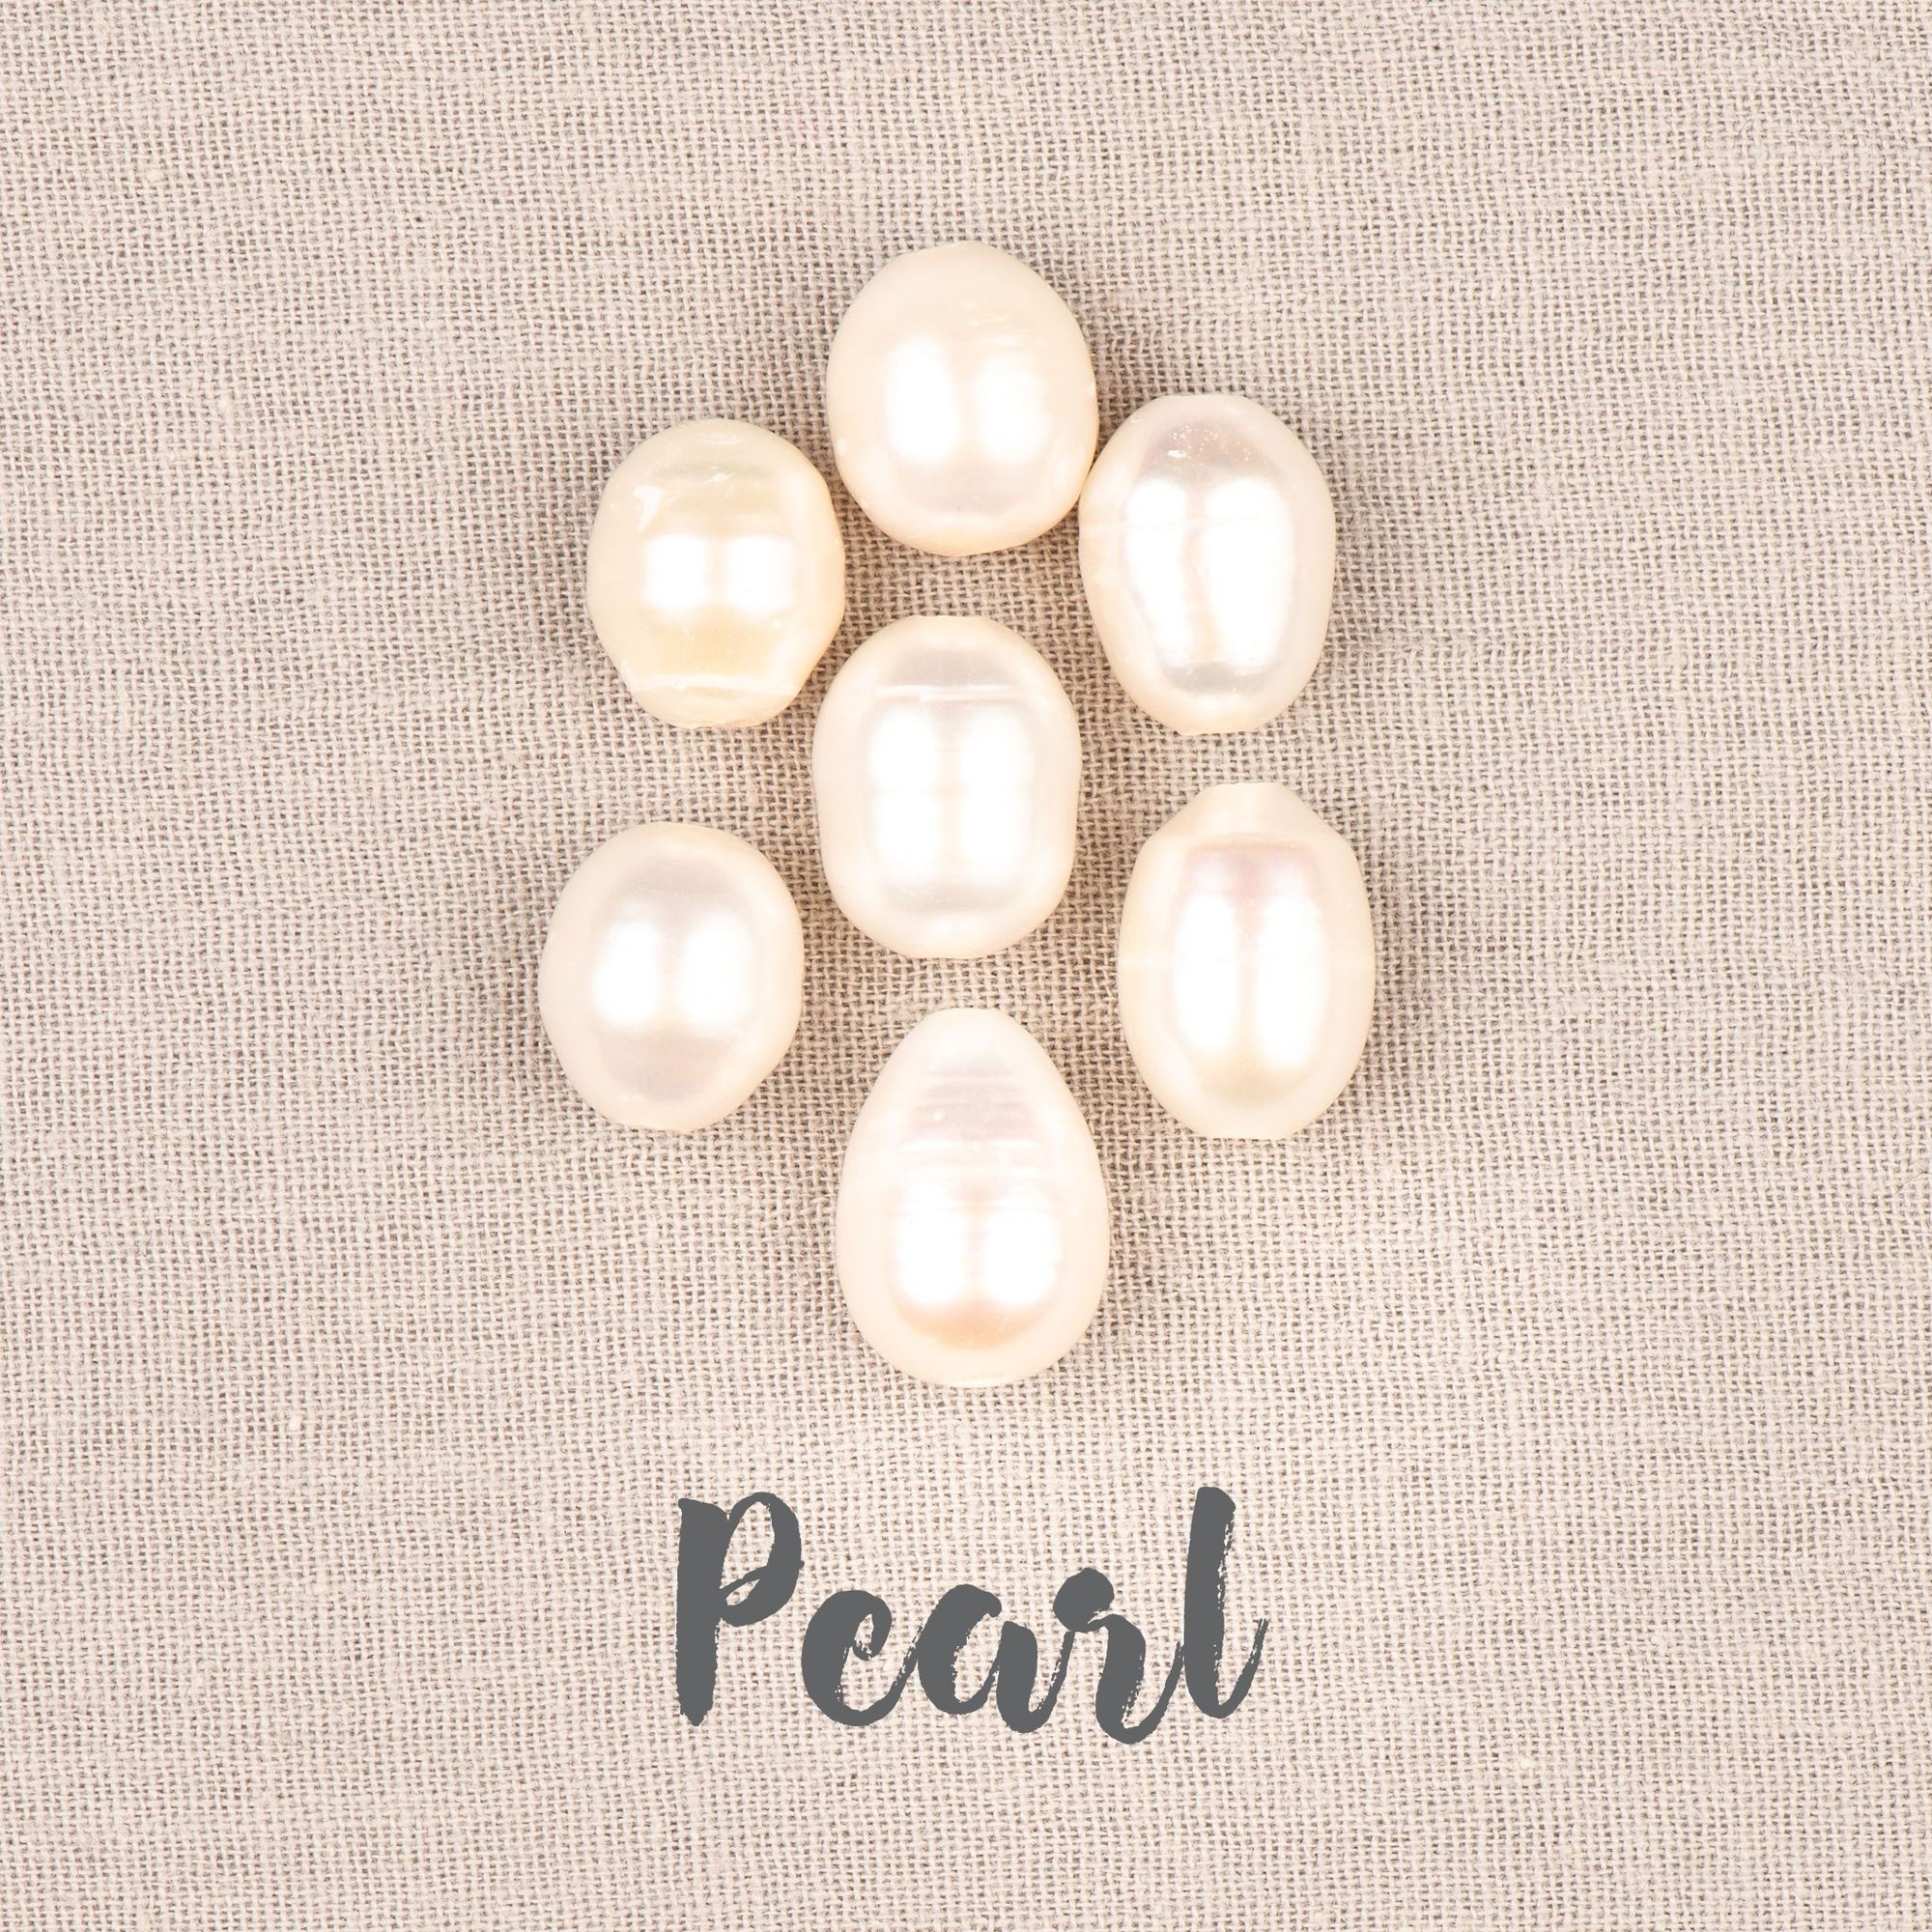 Pearl Guru Bead for Mala Necklace Merakalpa Malas